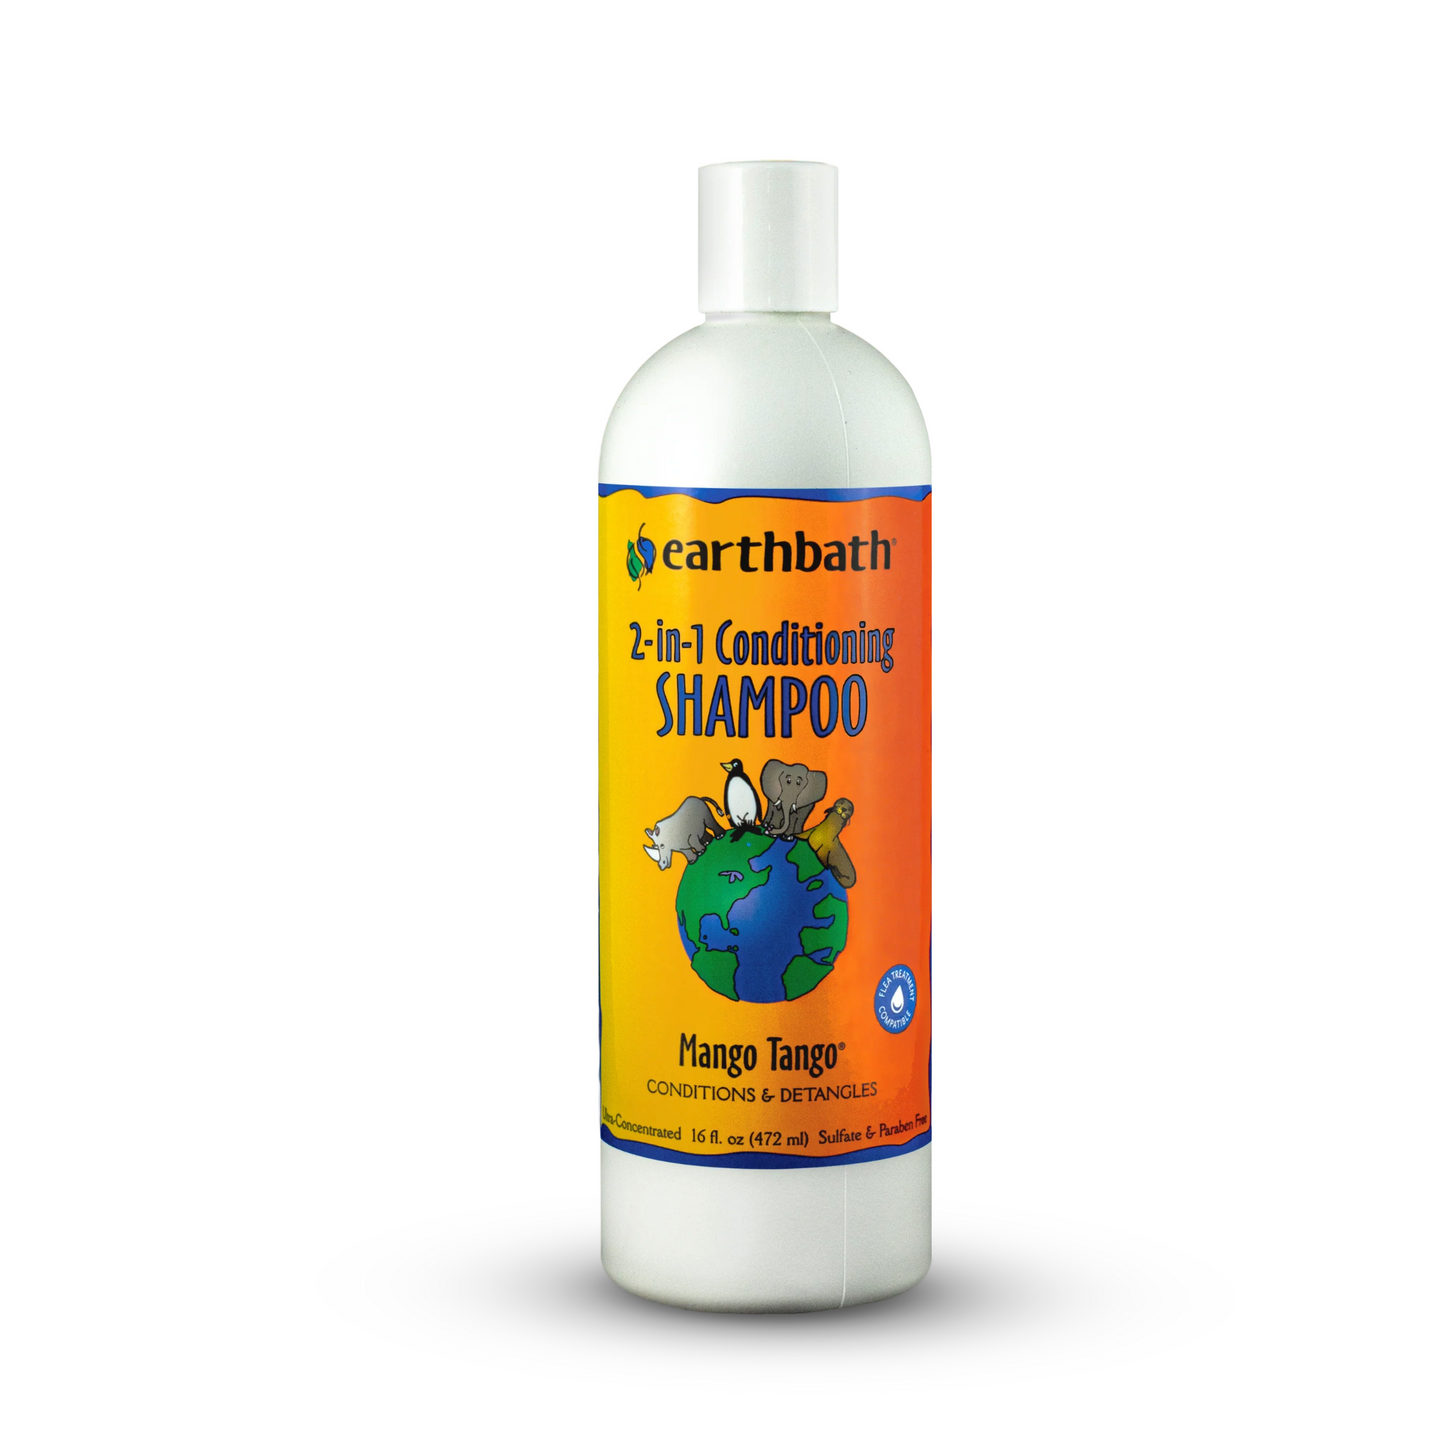 Mango Tango, 2-in-1 Conditioning Shampoo